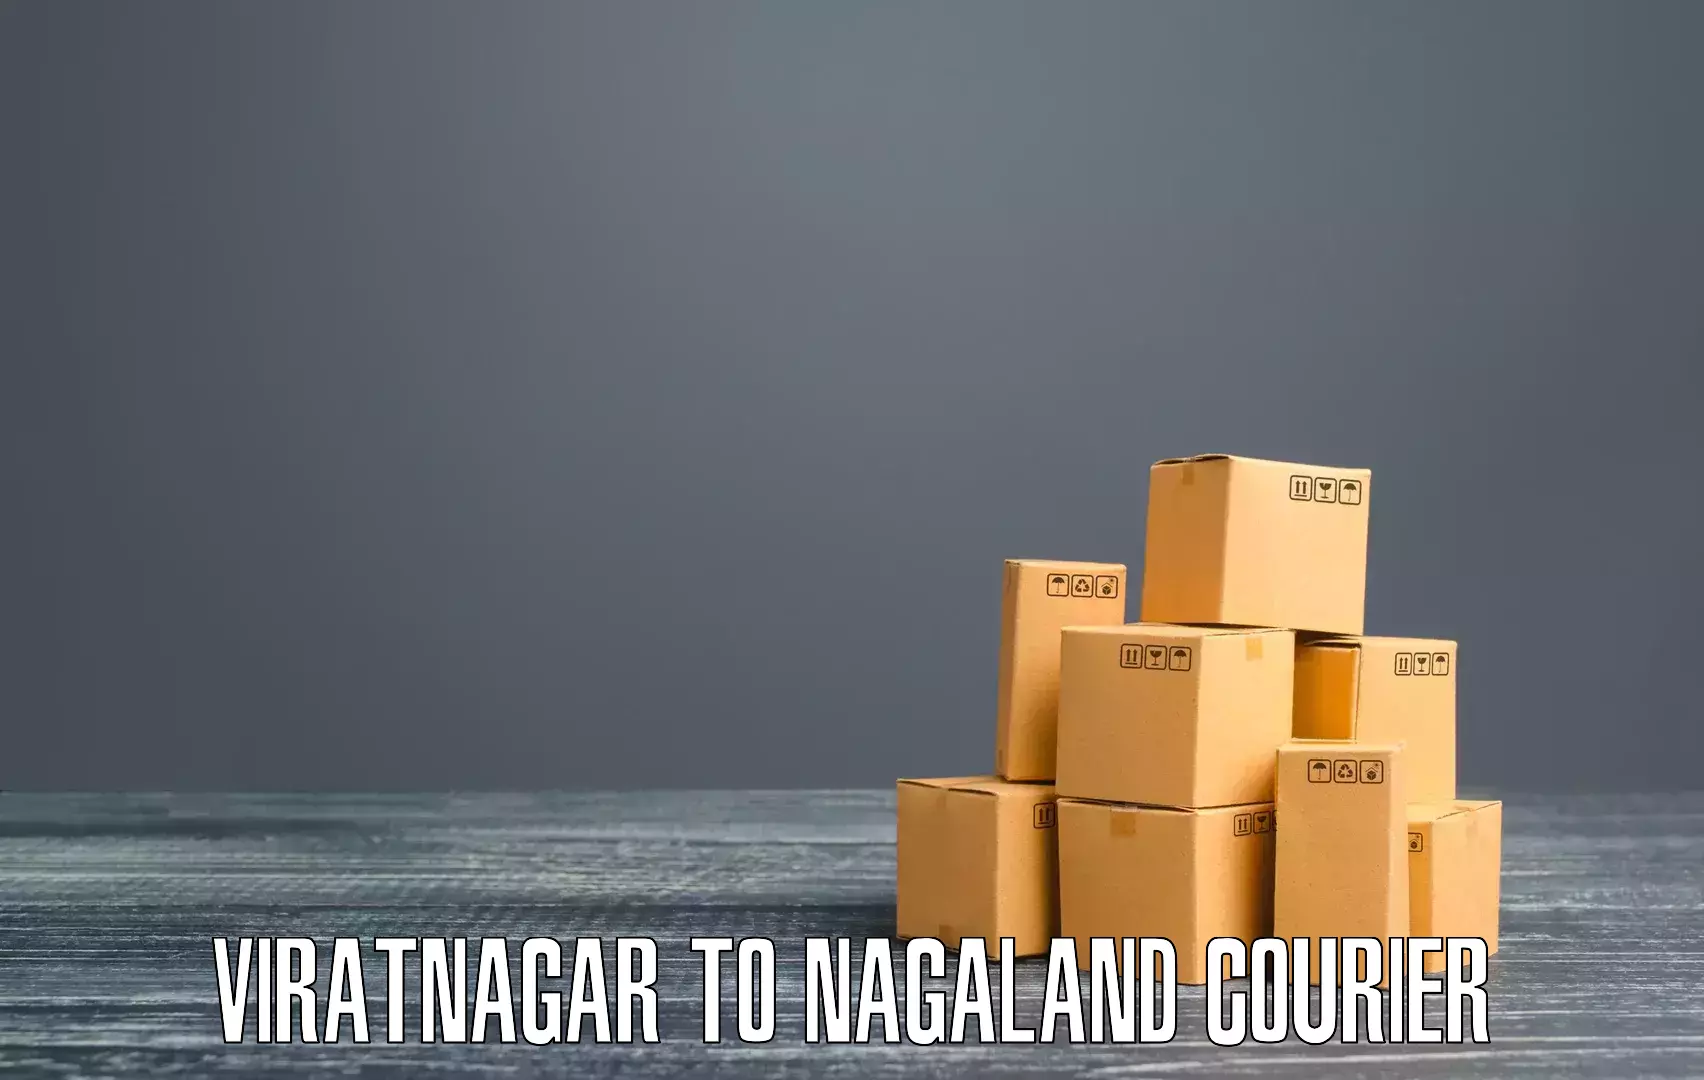 Same day shipping in Viratnagar to Nagaland